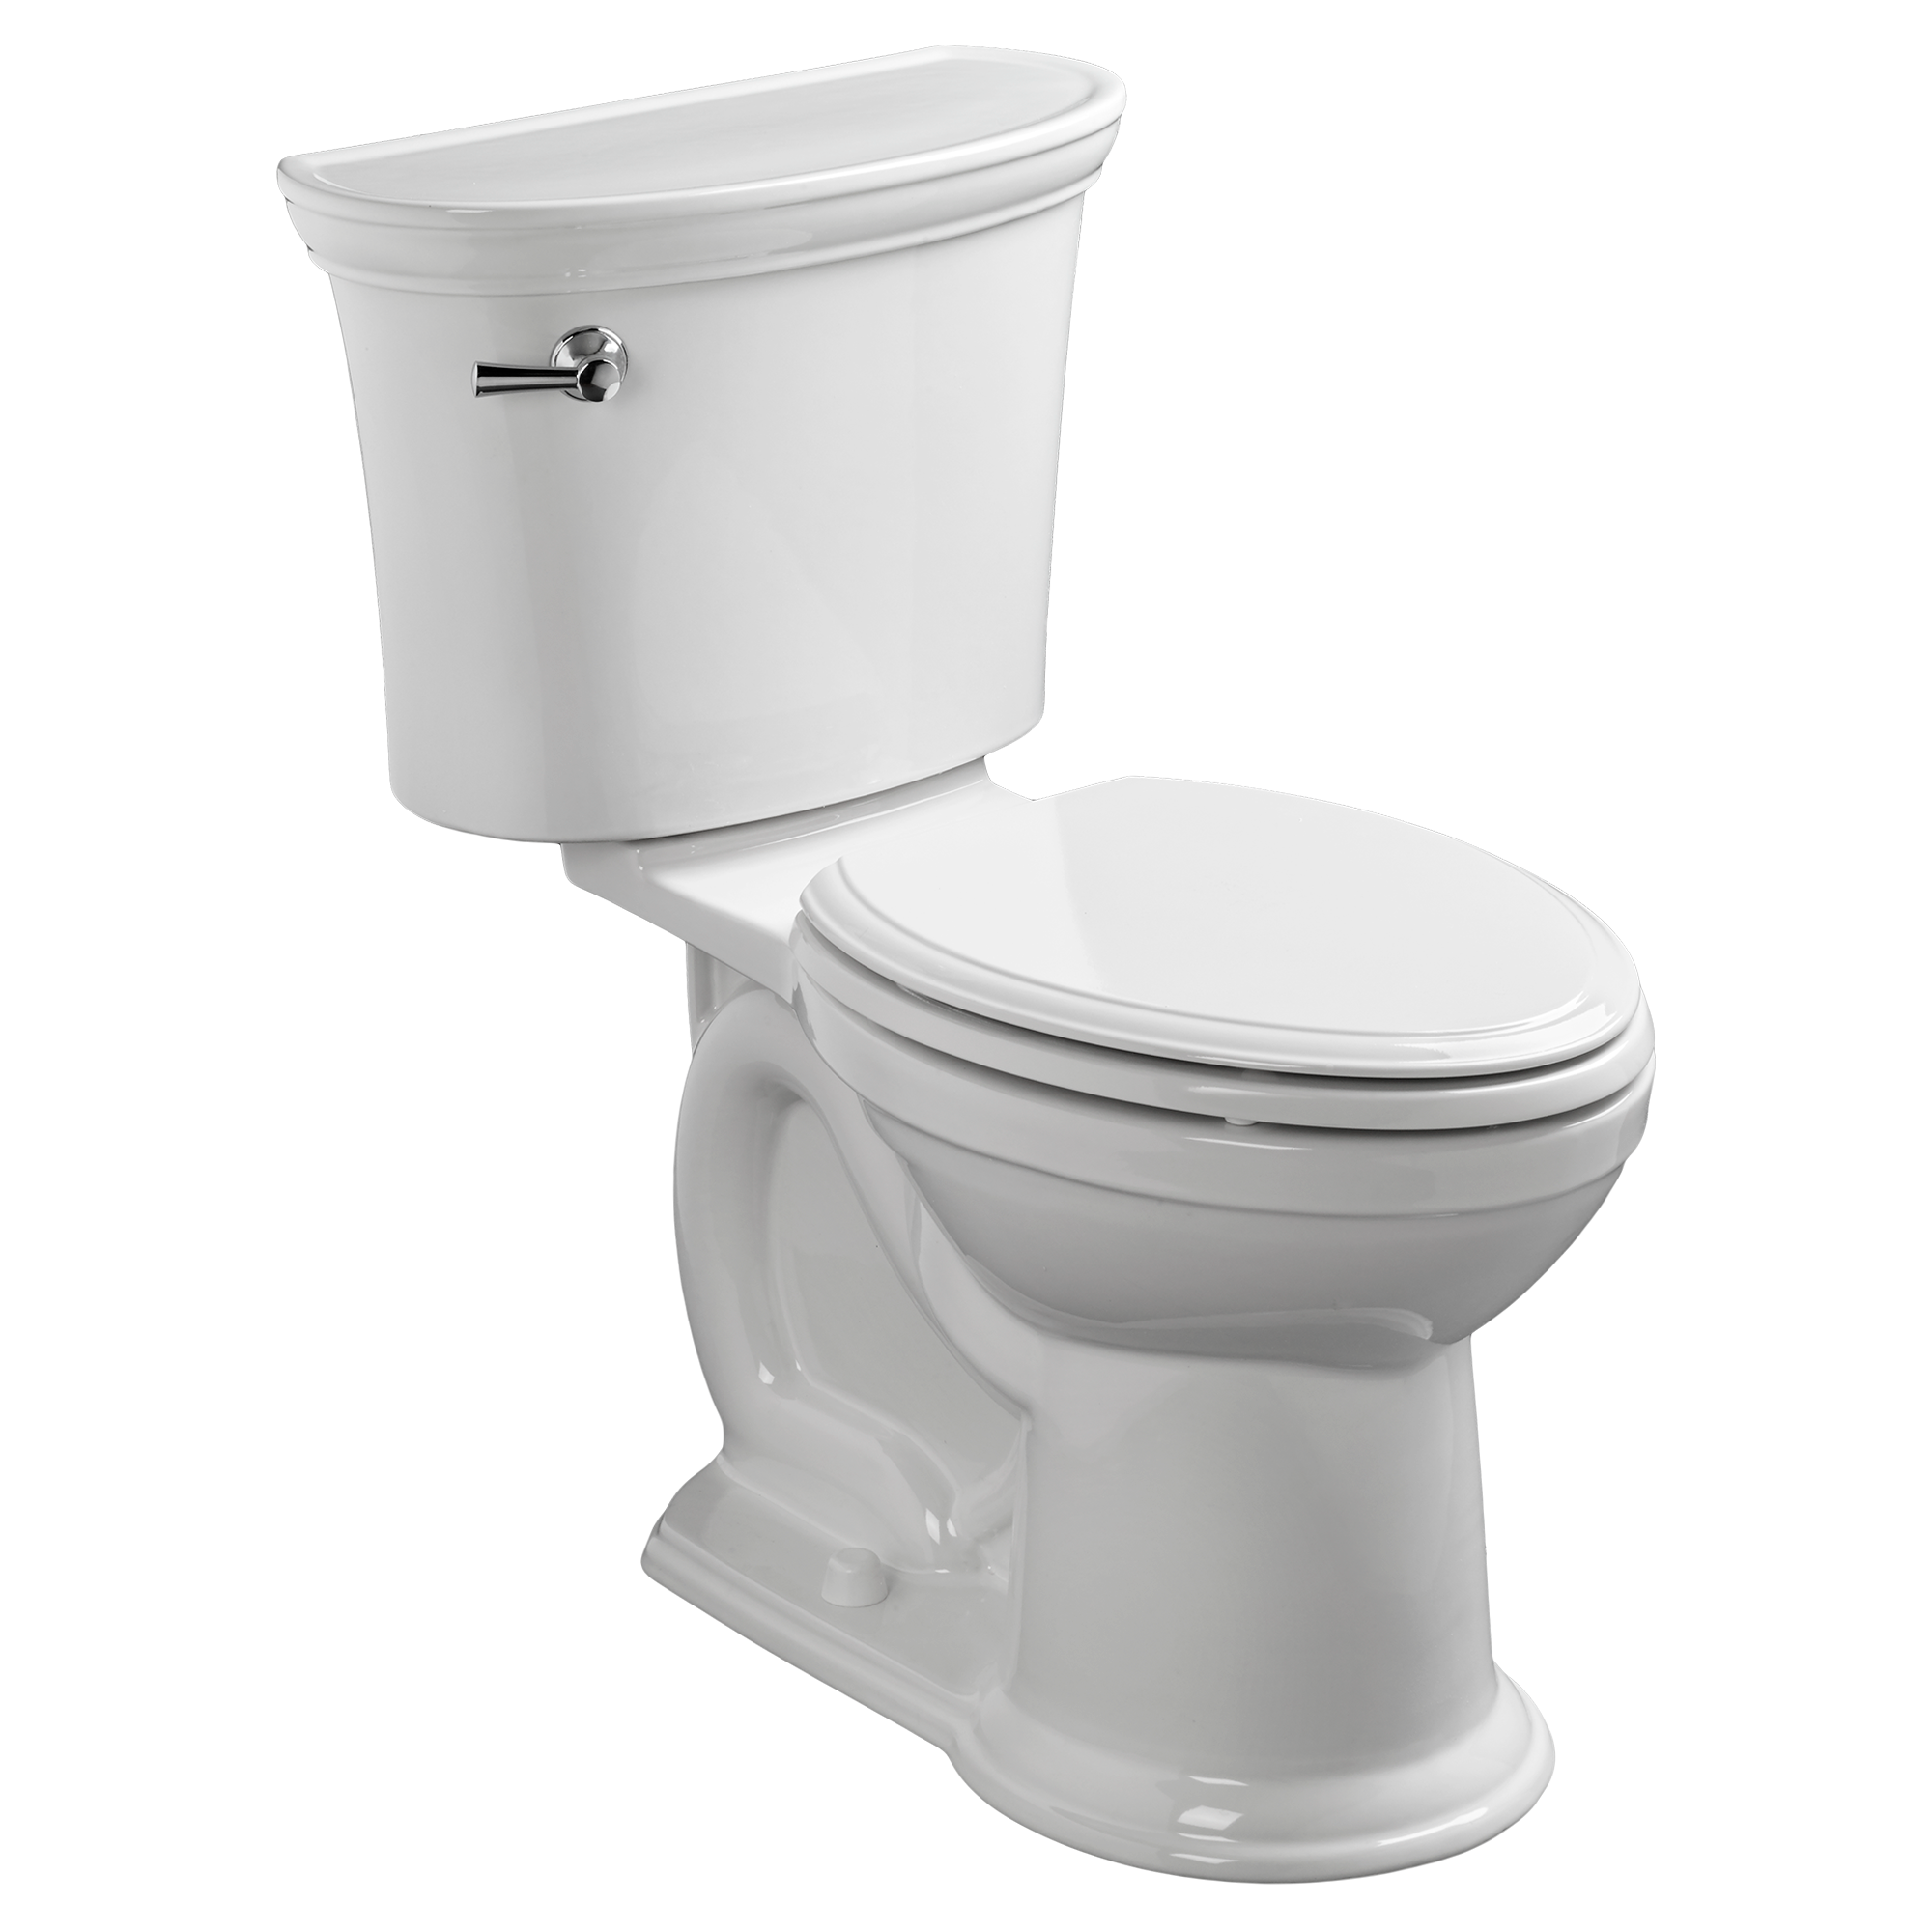 Toilet PNG HD - 142364